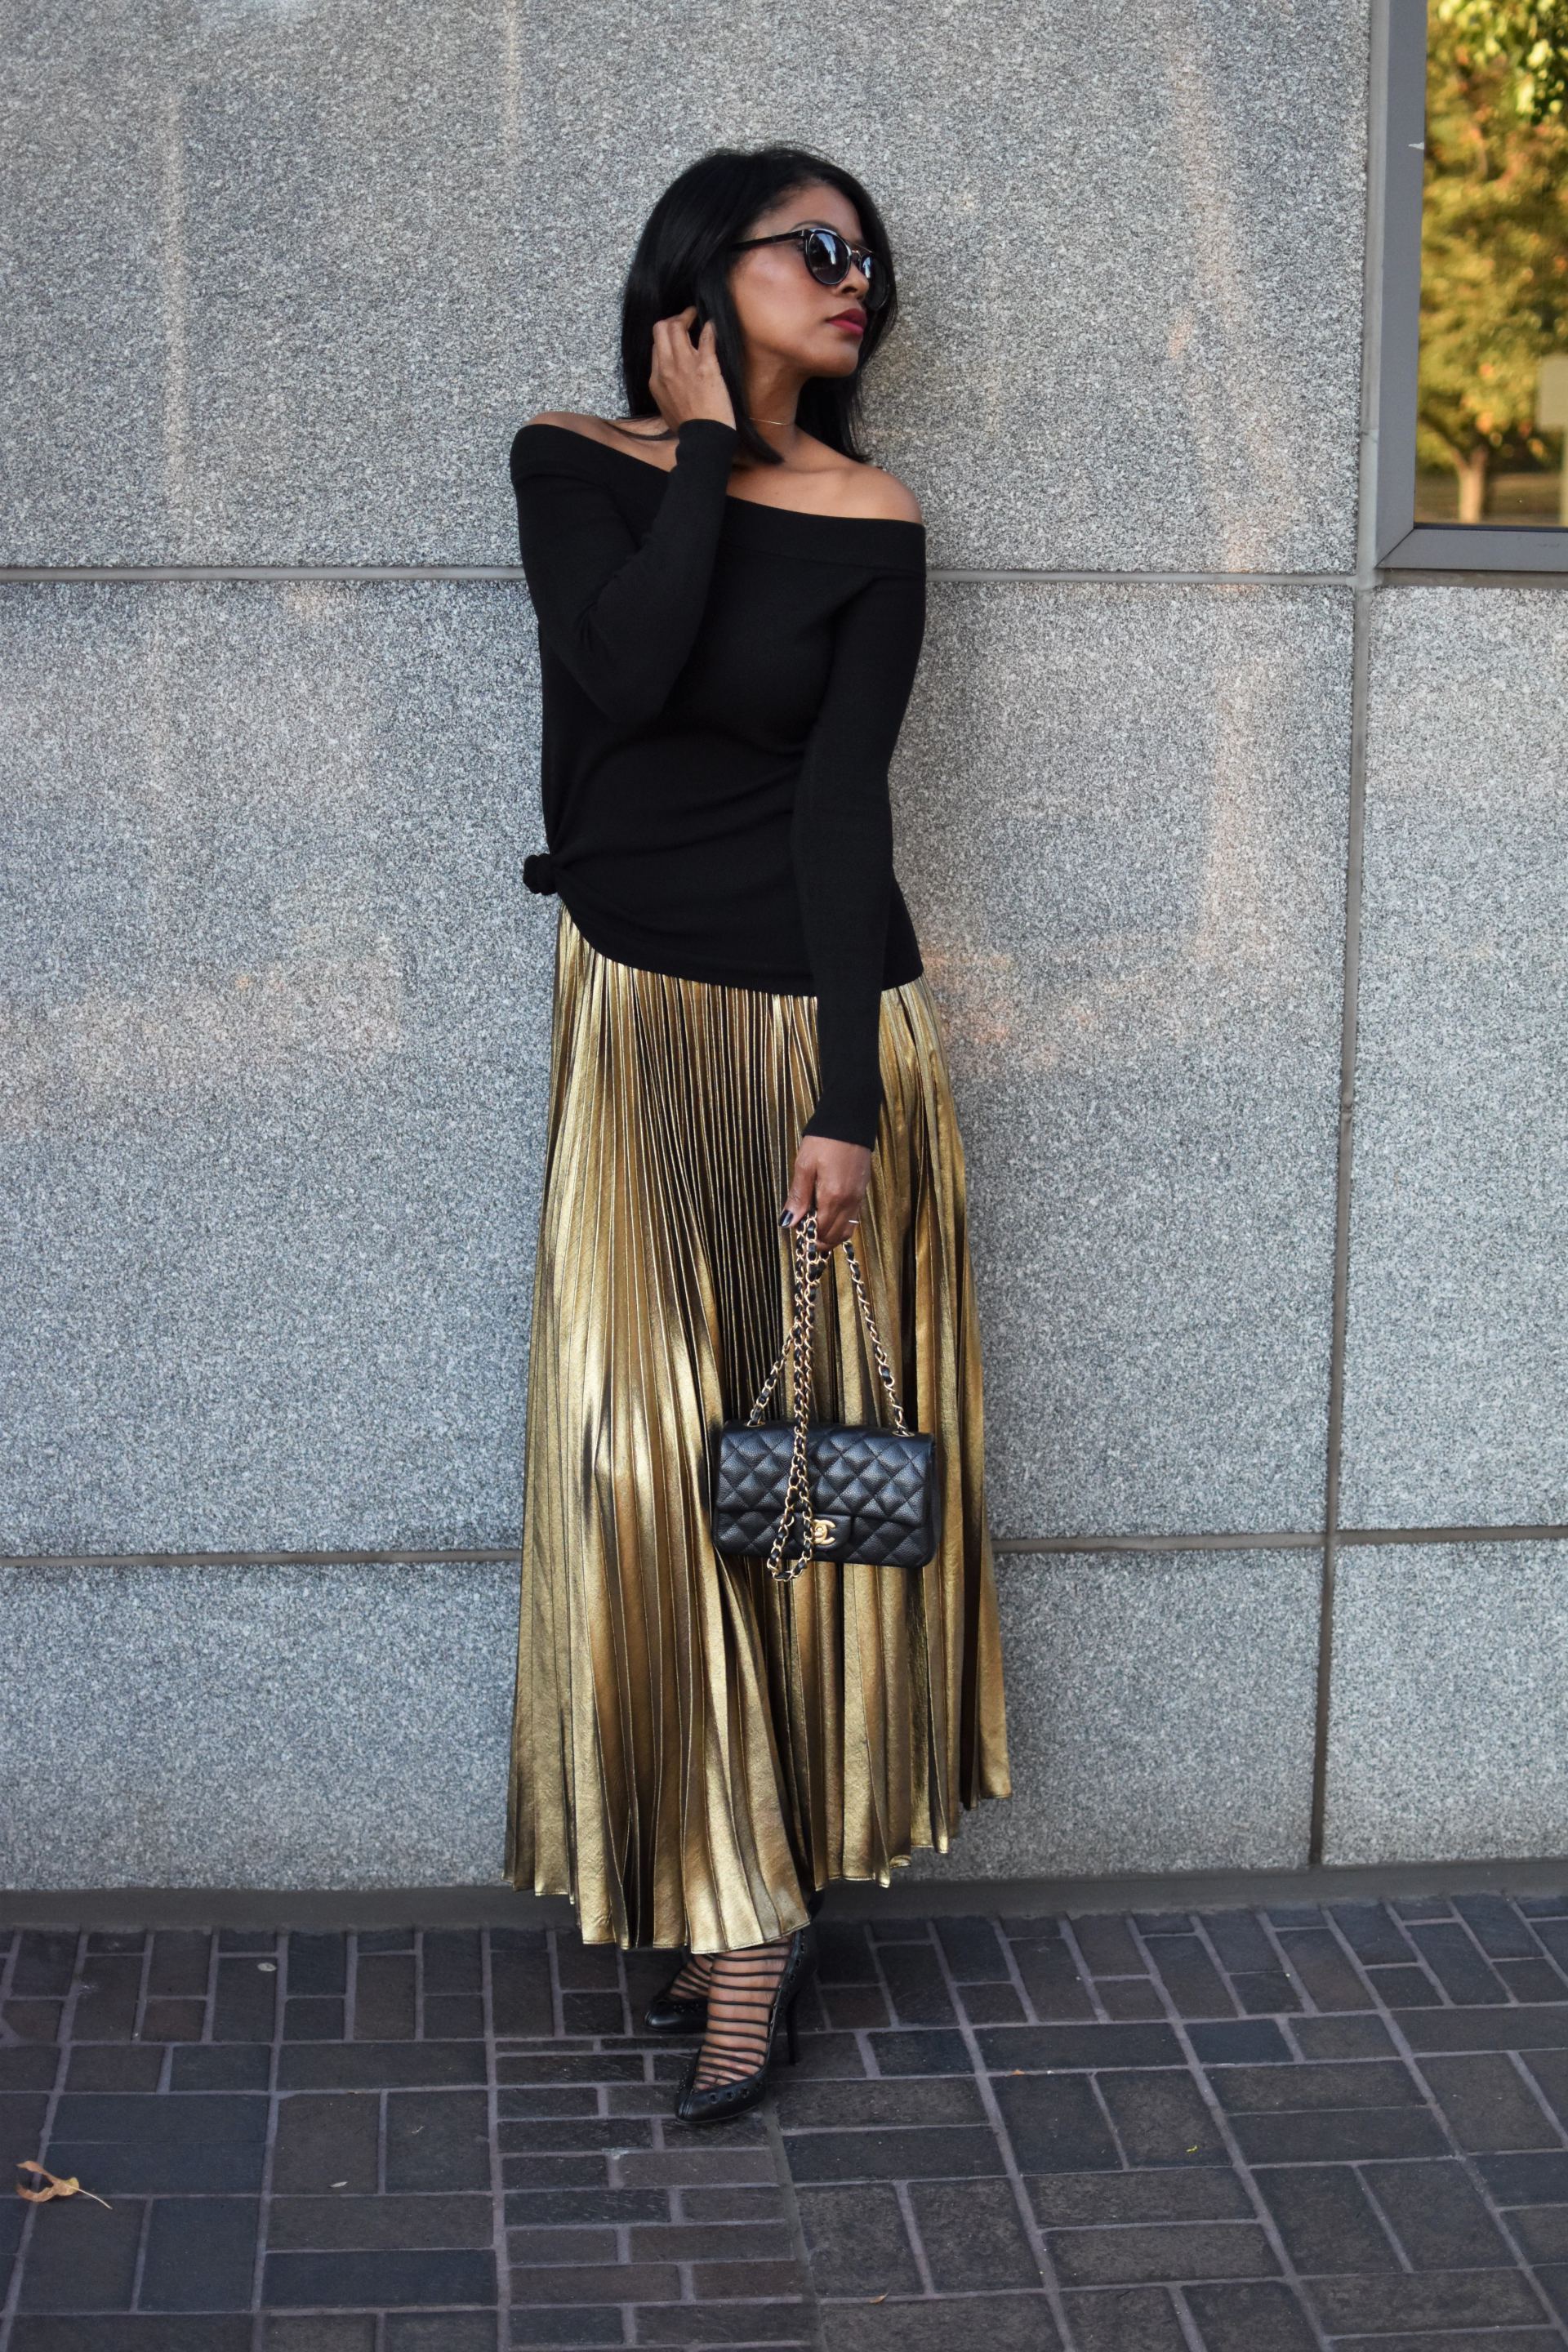 Gold Pleated Skirt - Reina Valentina